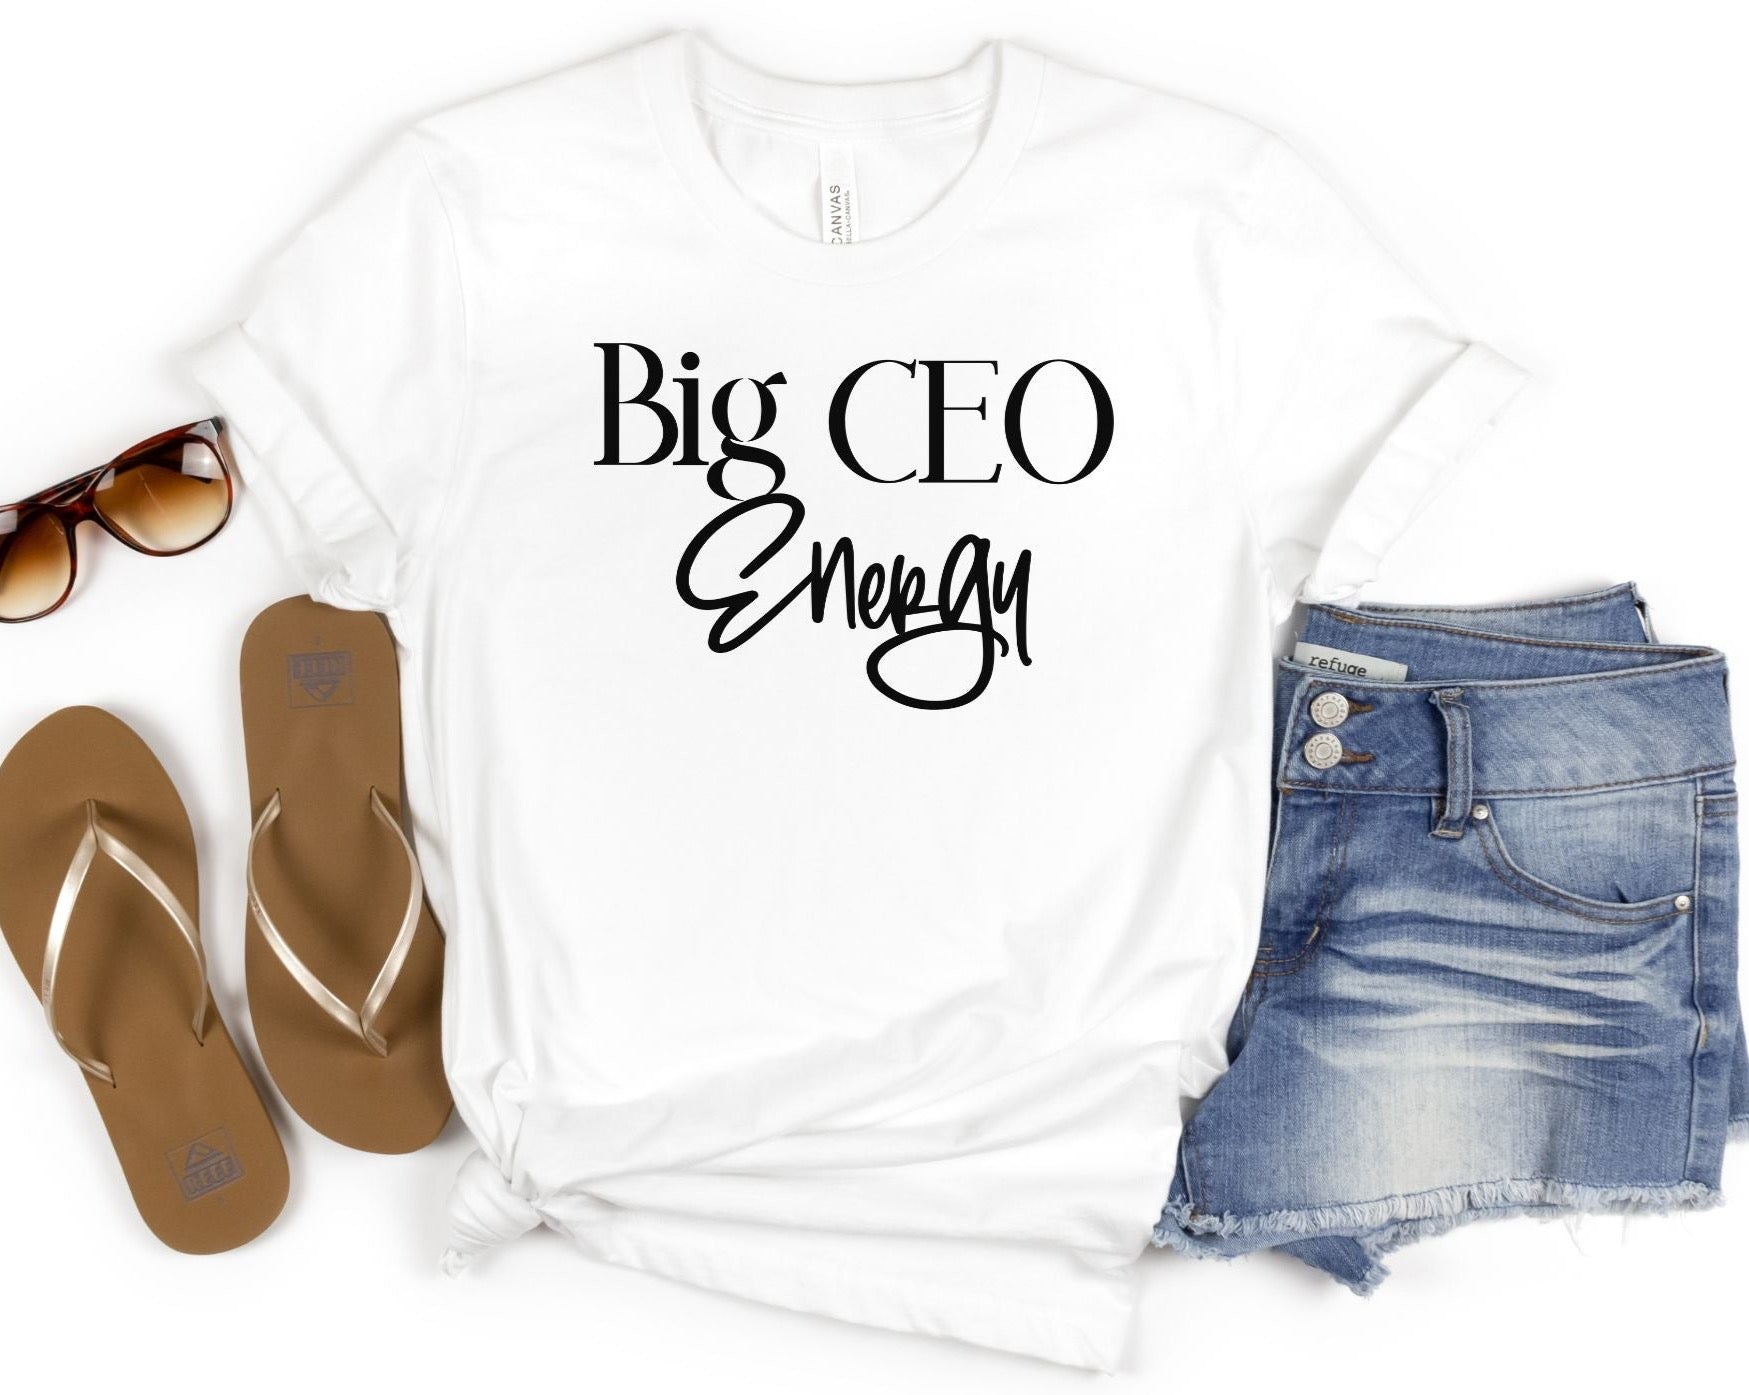 Big CEO Energy Shirt Black ; Small Business Owner Gift; Entrepreneur White